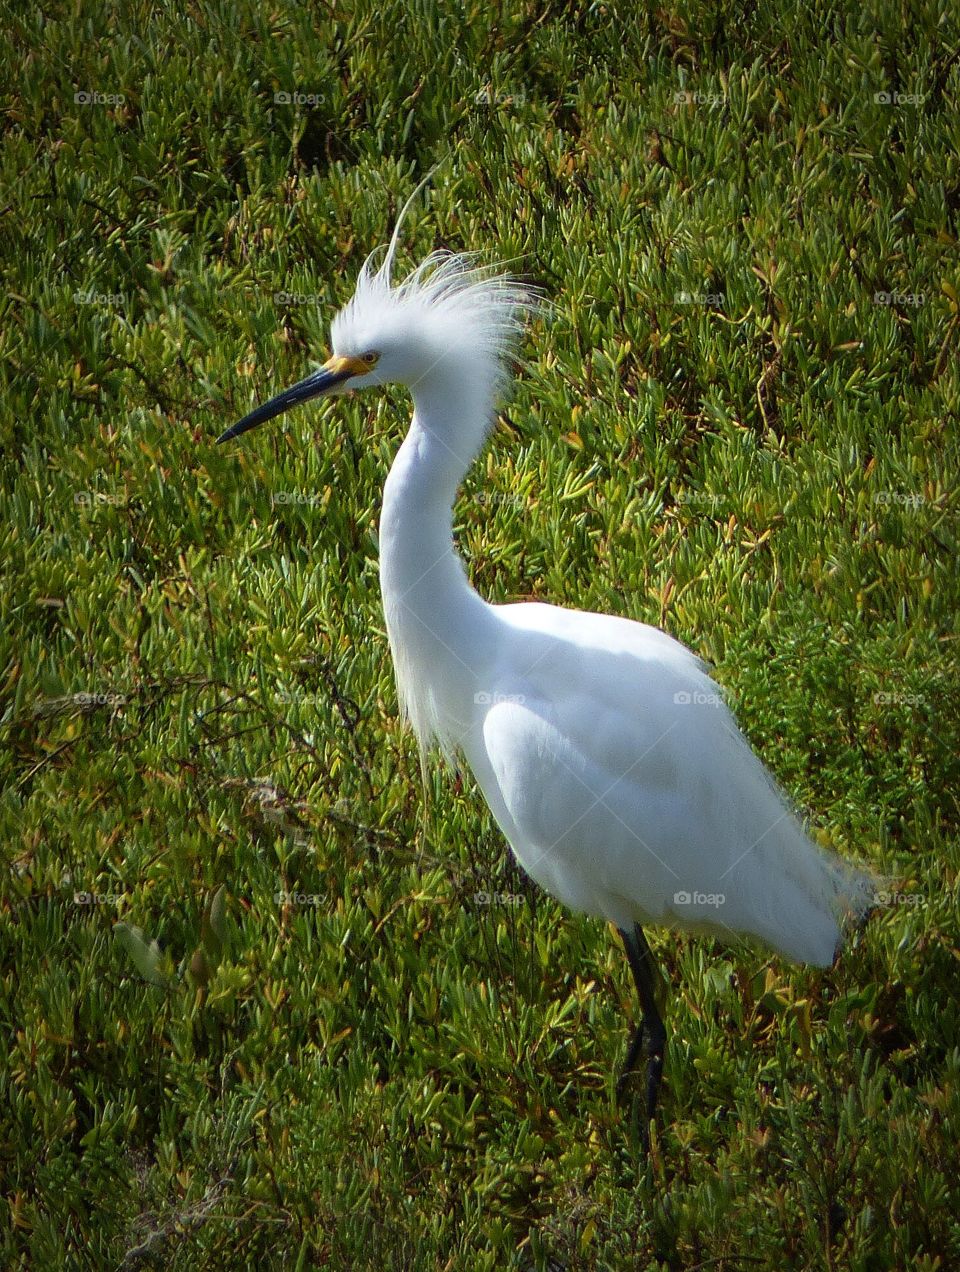 Snowy egret alpha bird